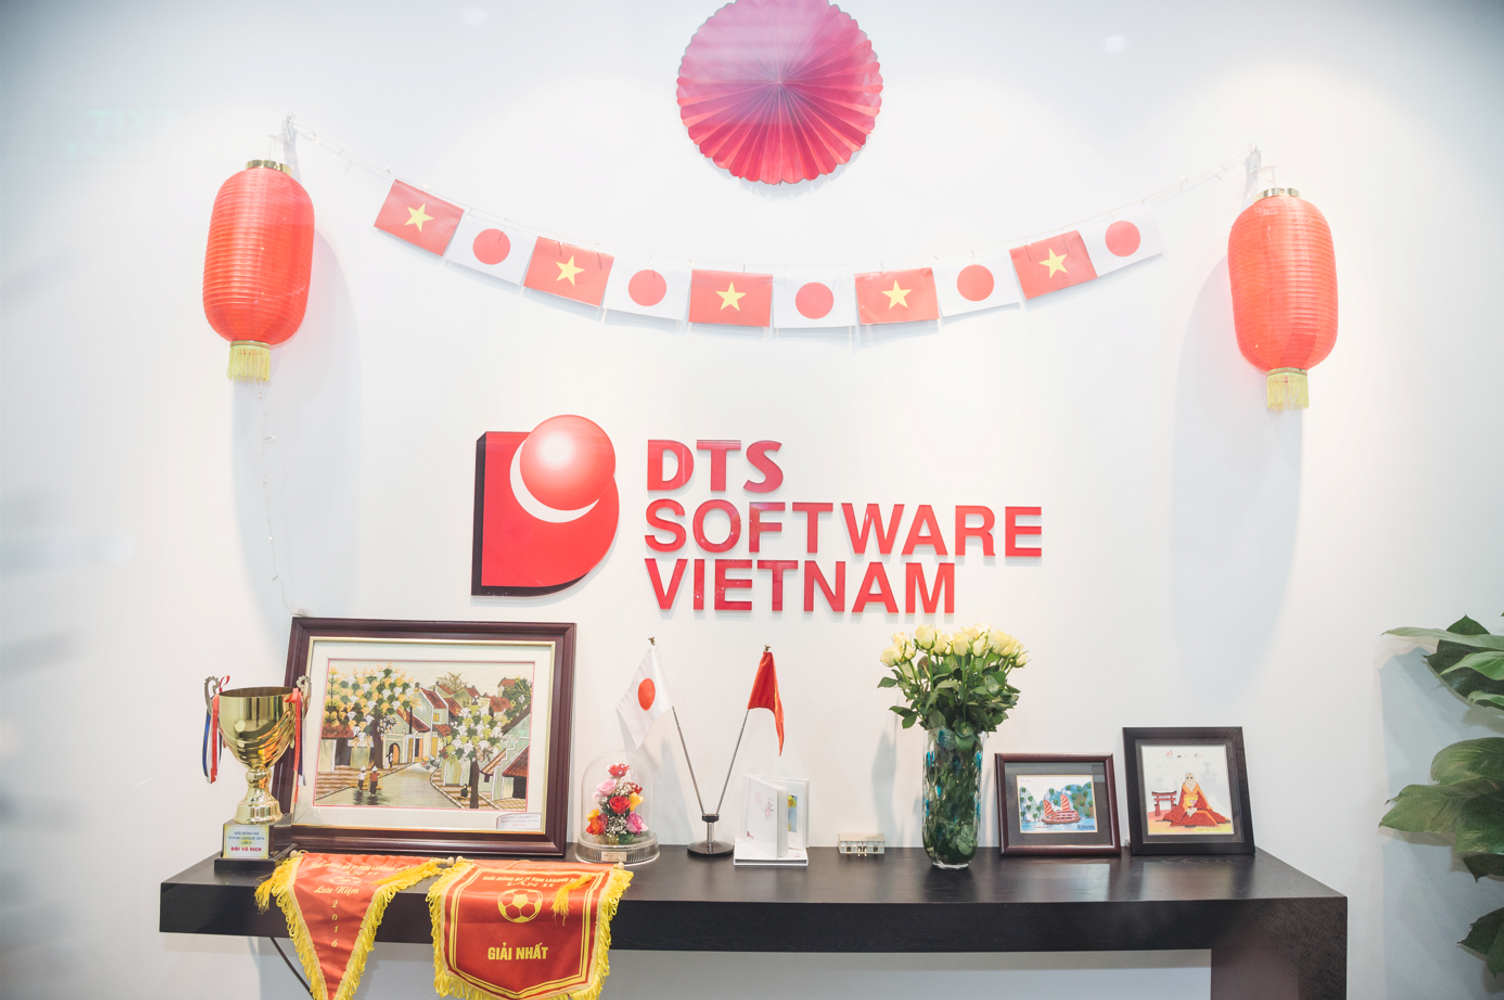 DTS Software Viet Nam